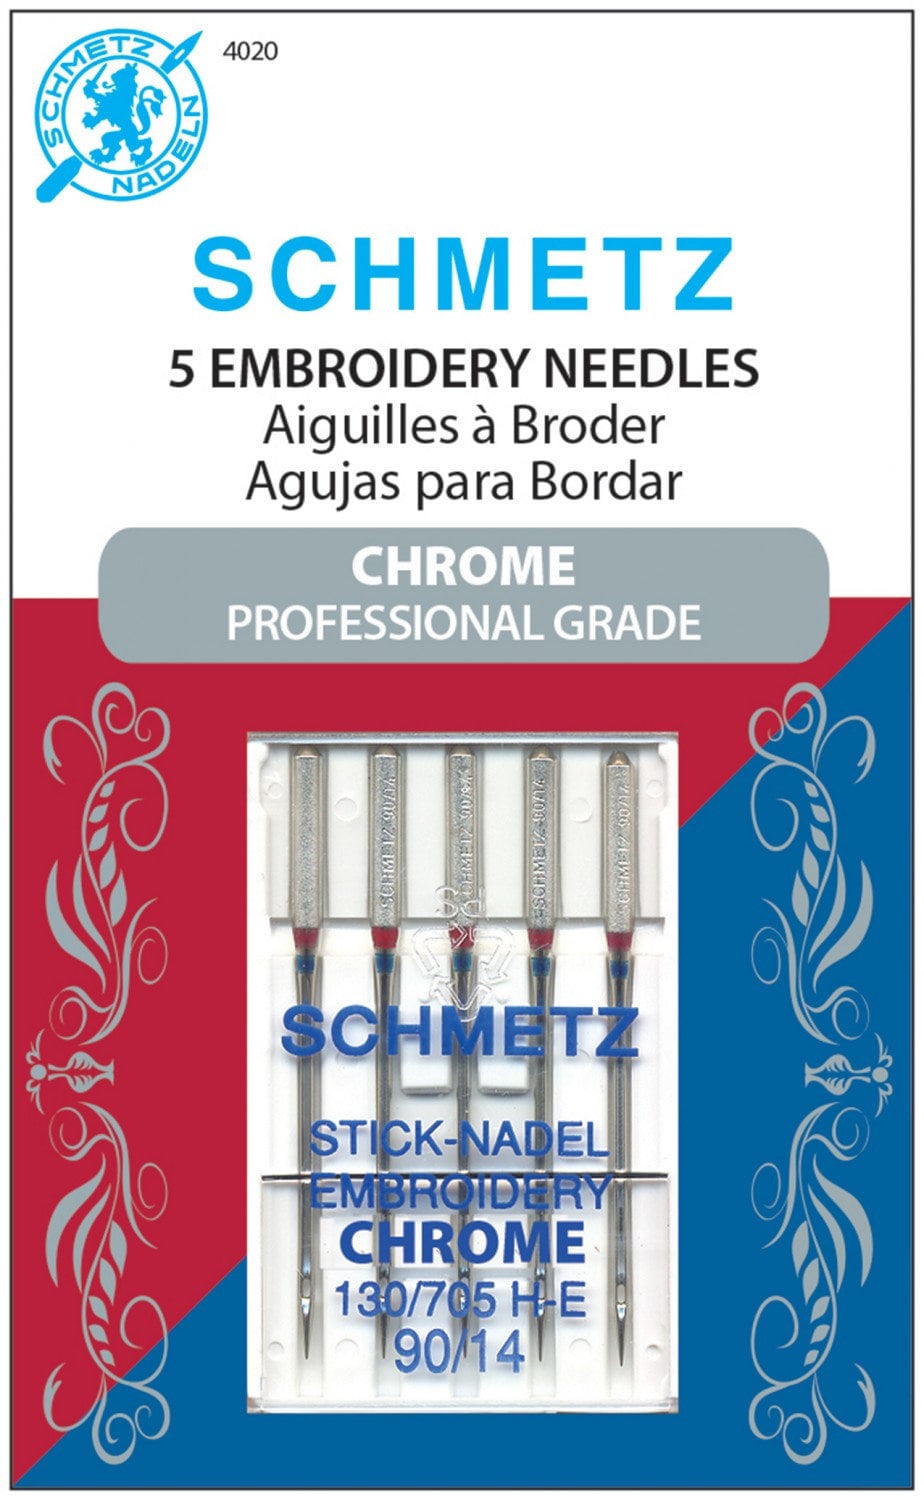 Schmetz Chrome Embroidery Needles - Size 90/14 - Item #4020